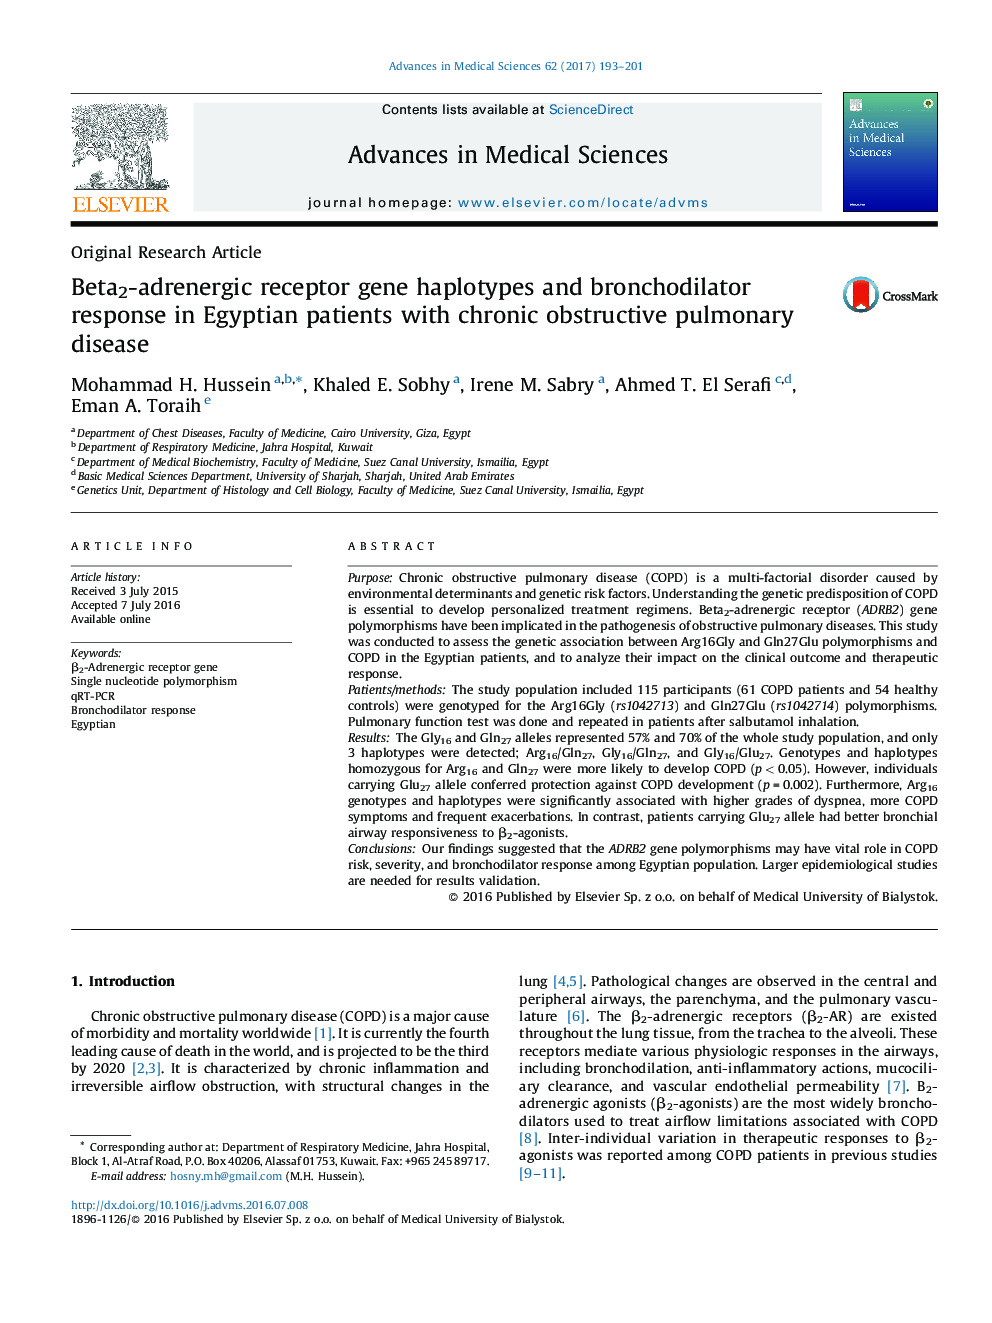 Beta2-adrenergic receptor gene haplotypes and bronchodilator response in Egyptian patients with chronic obstructive pulmonary disease